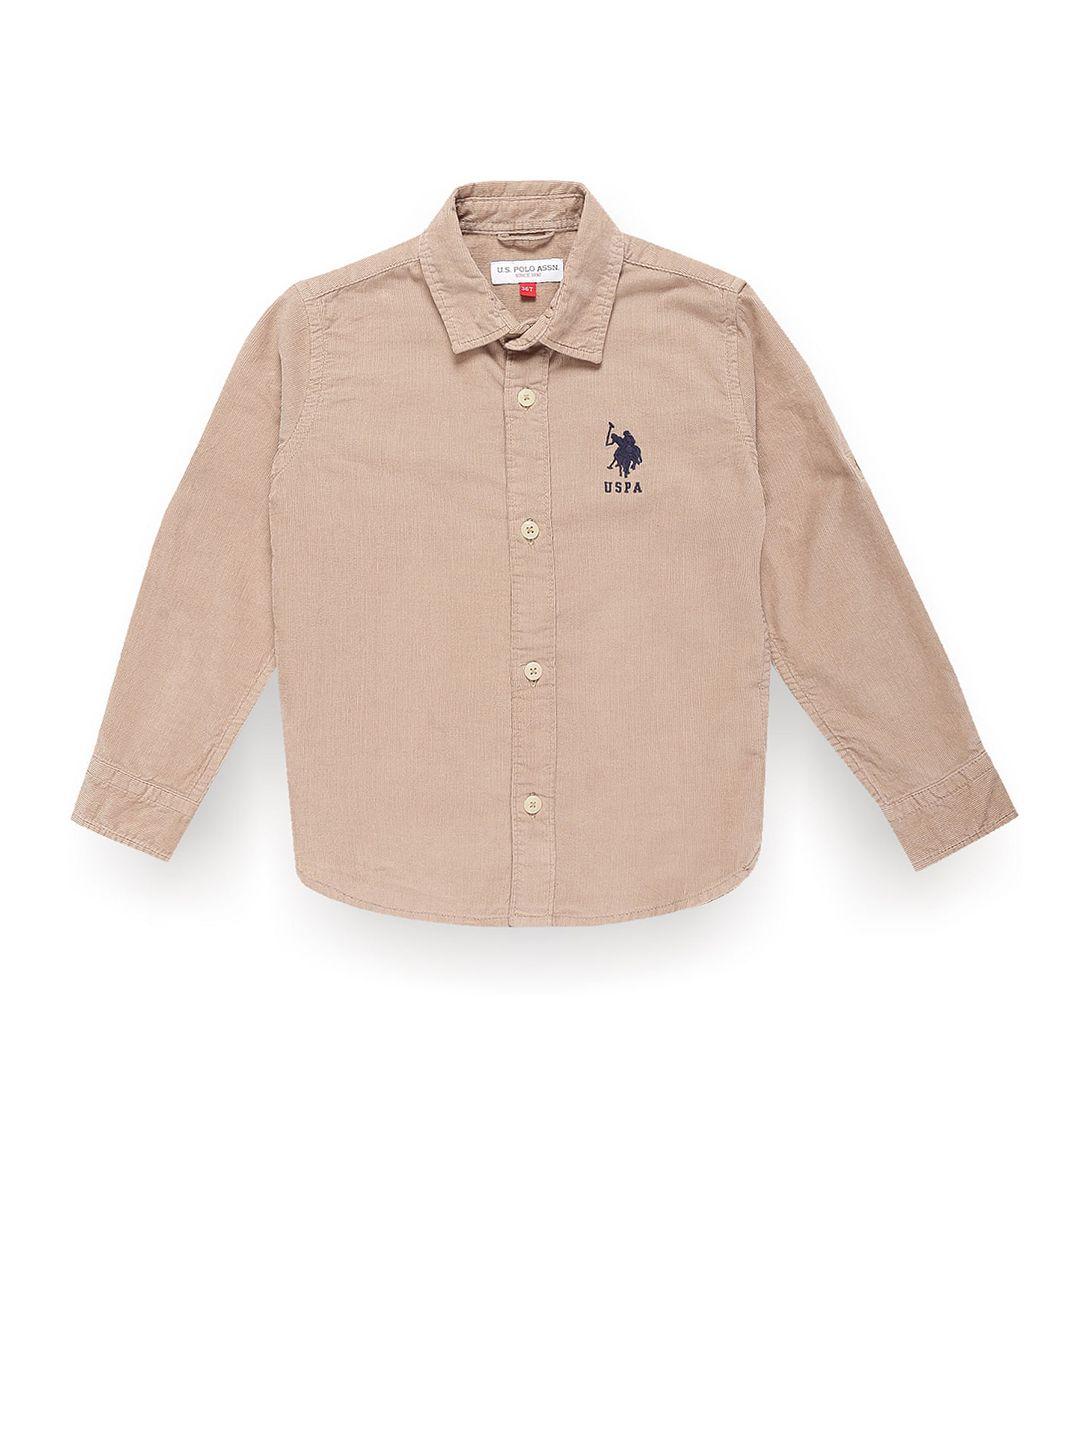 u.s. polo assn. kids boys classic fit pure cotton corduroy casual shirt